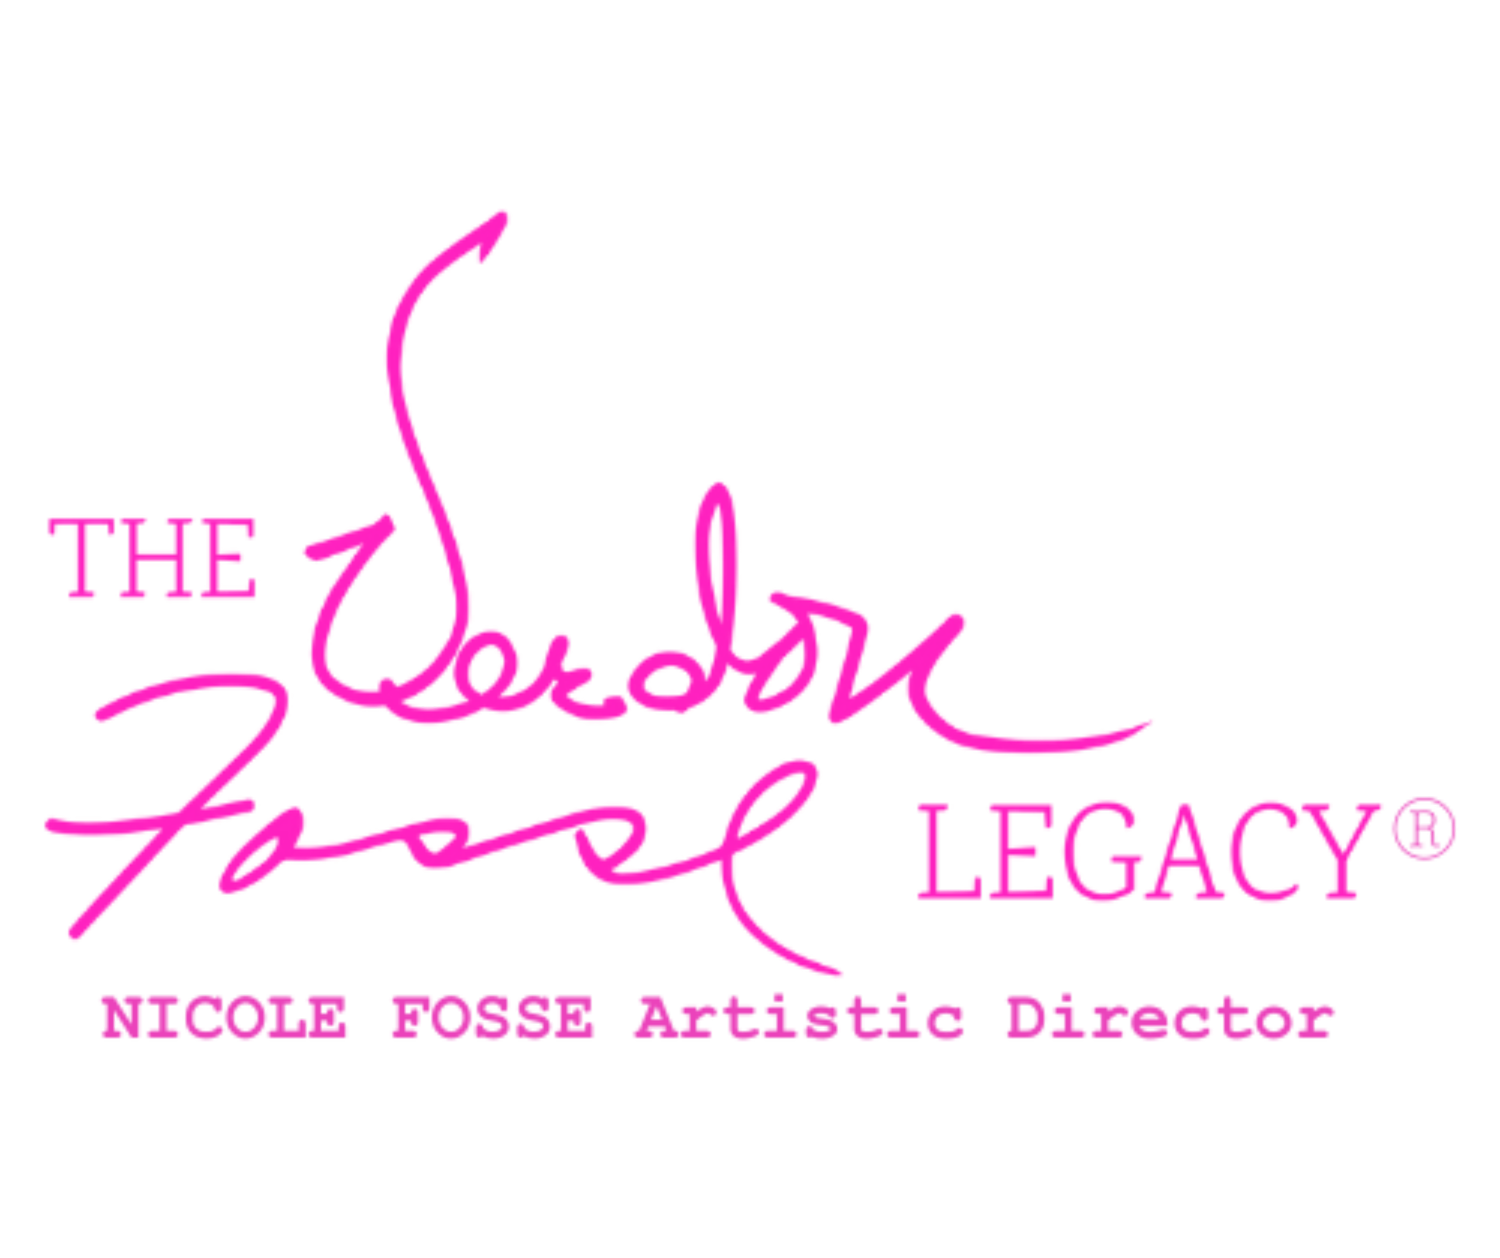 The Verdon Fosse® Legacy